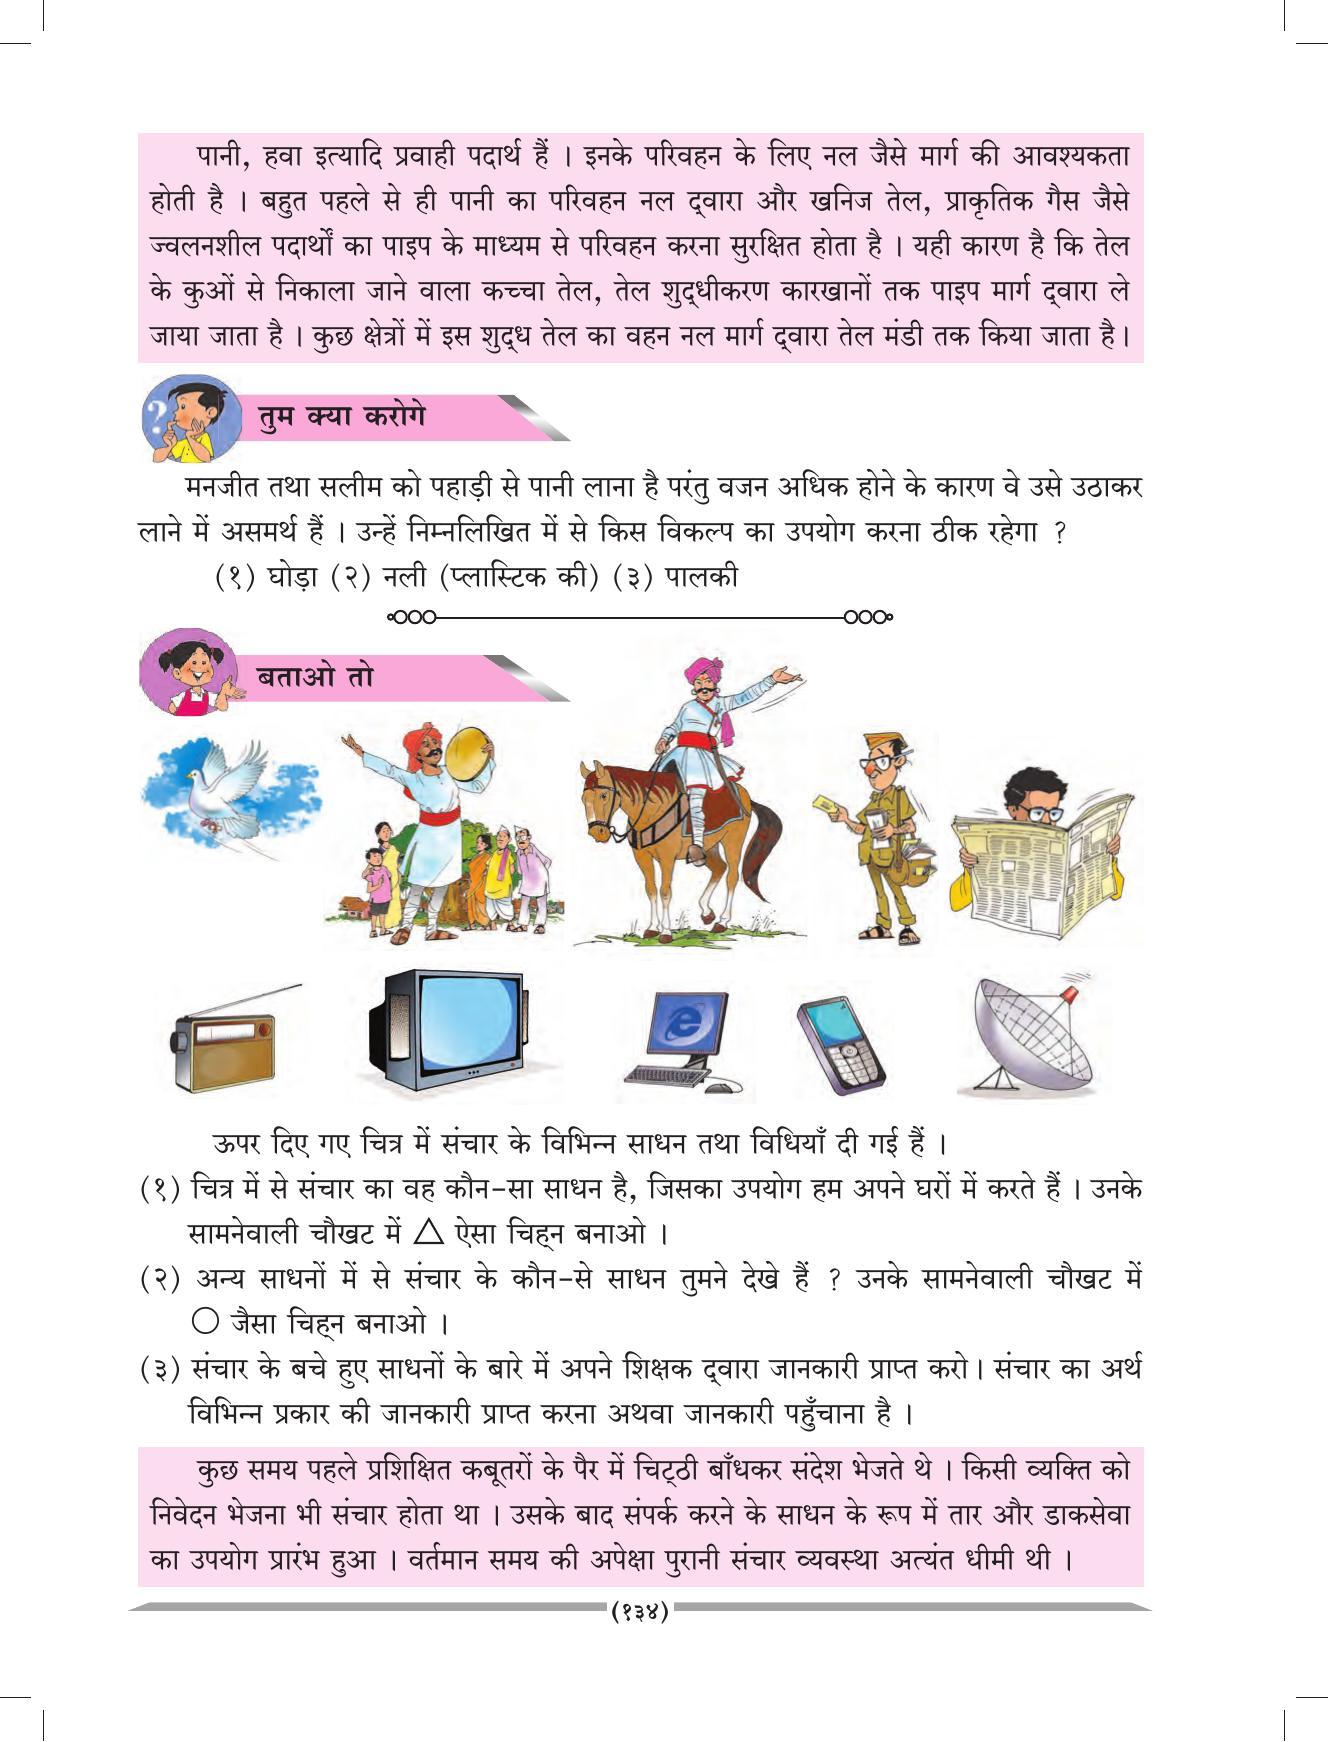 Maharashtra Board Class 4 EVS 1 (Hindi Medium) Textbook - Page 144